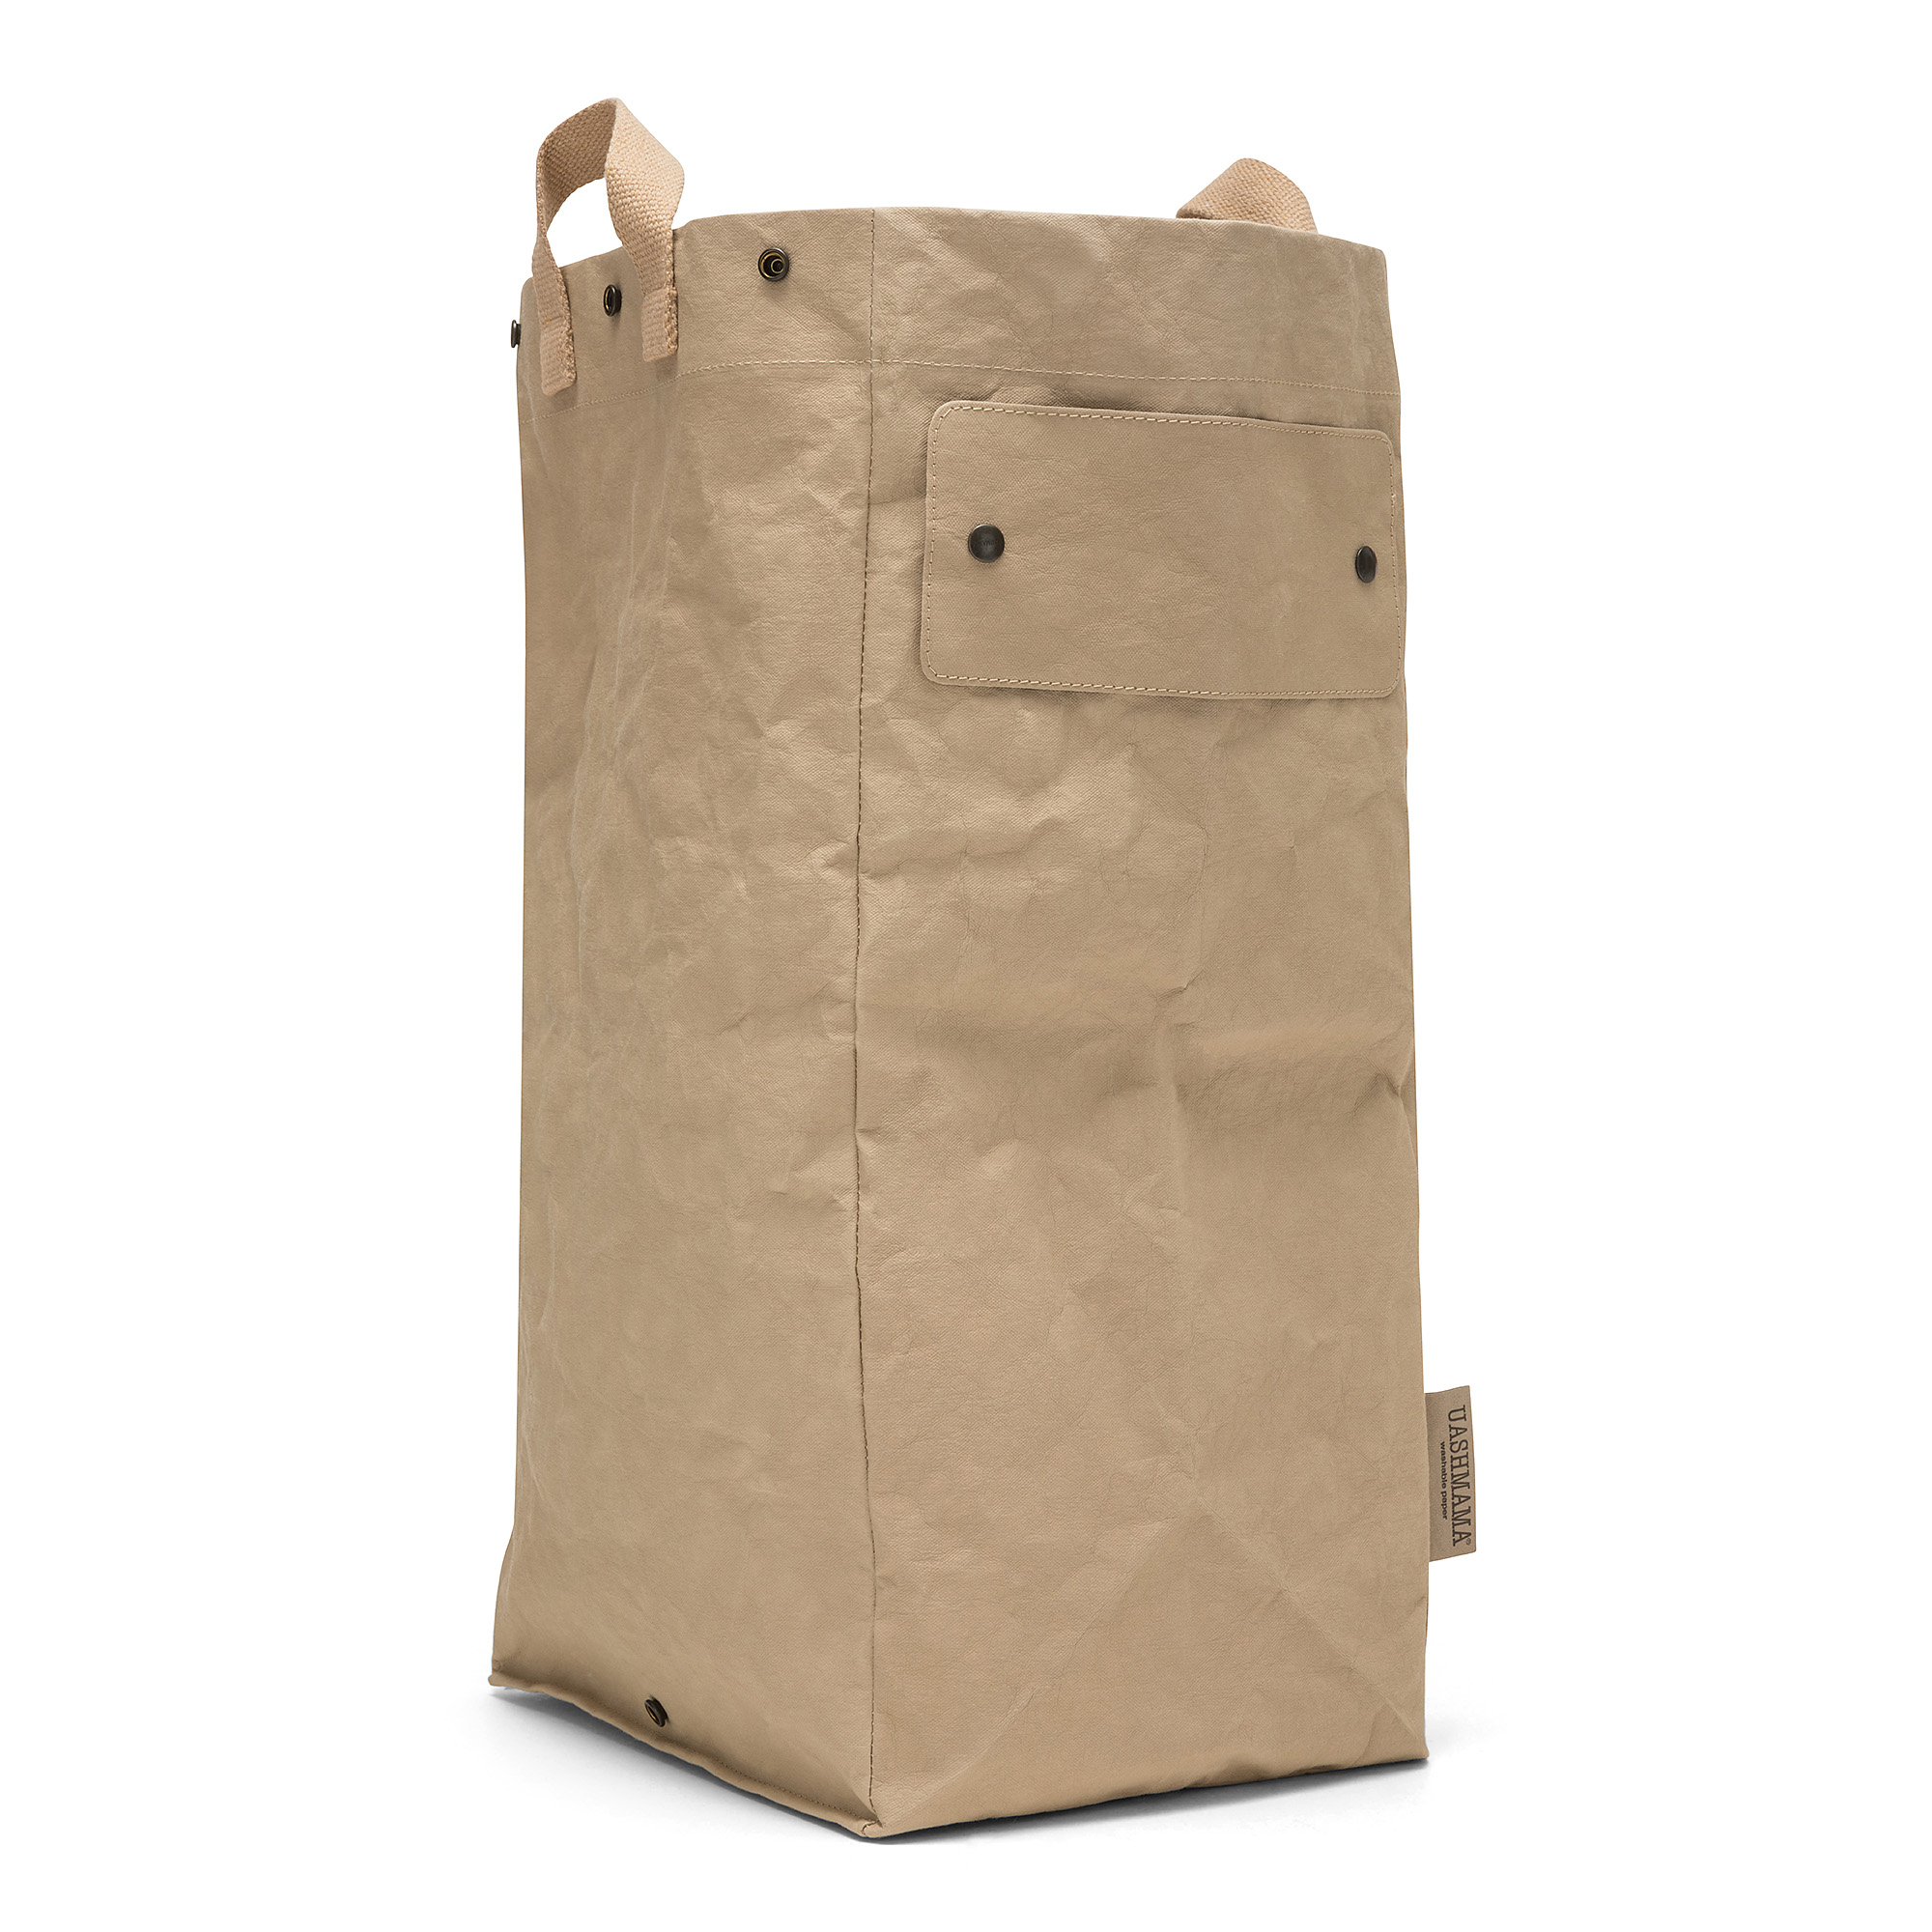 Uashmama Eco-Friendly Laundry Bag with Label (Grey)